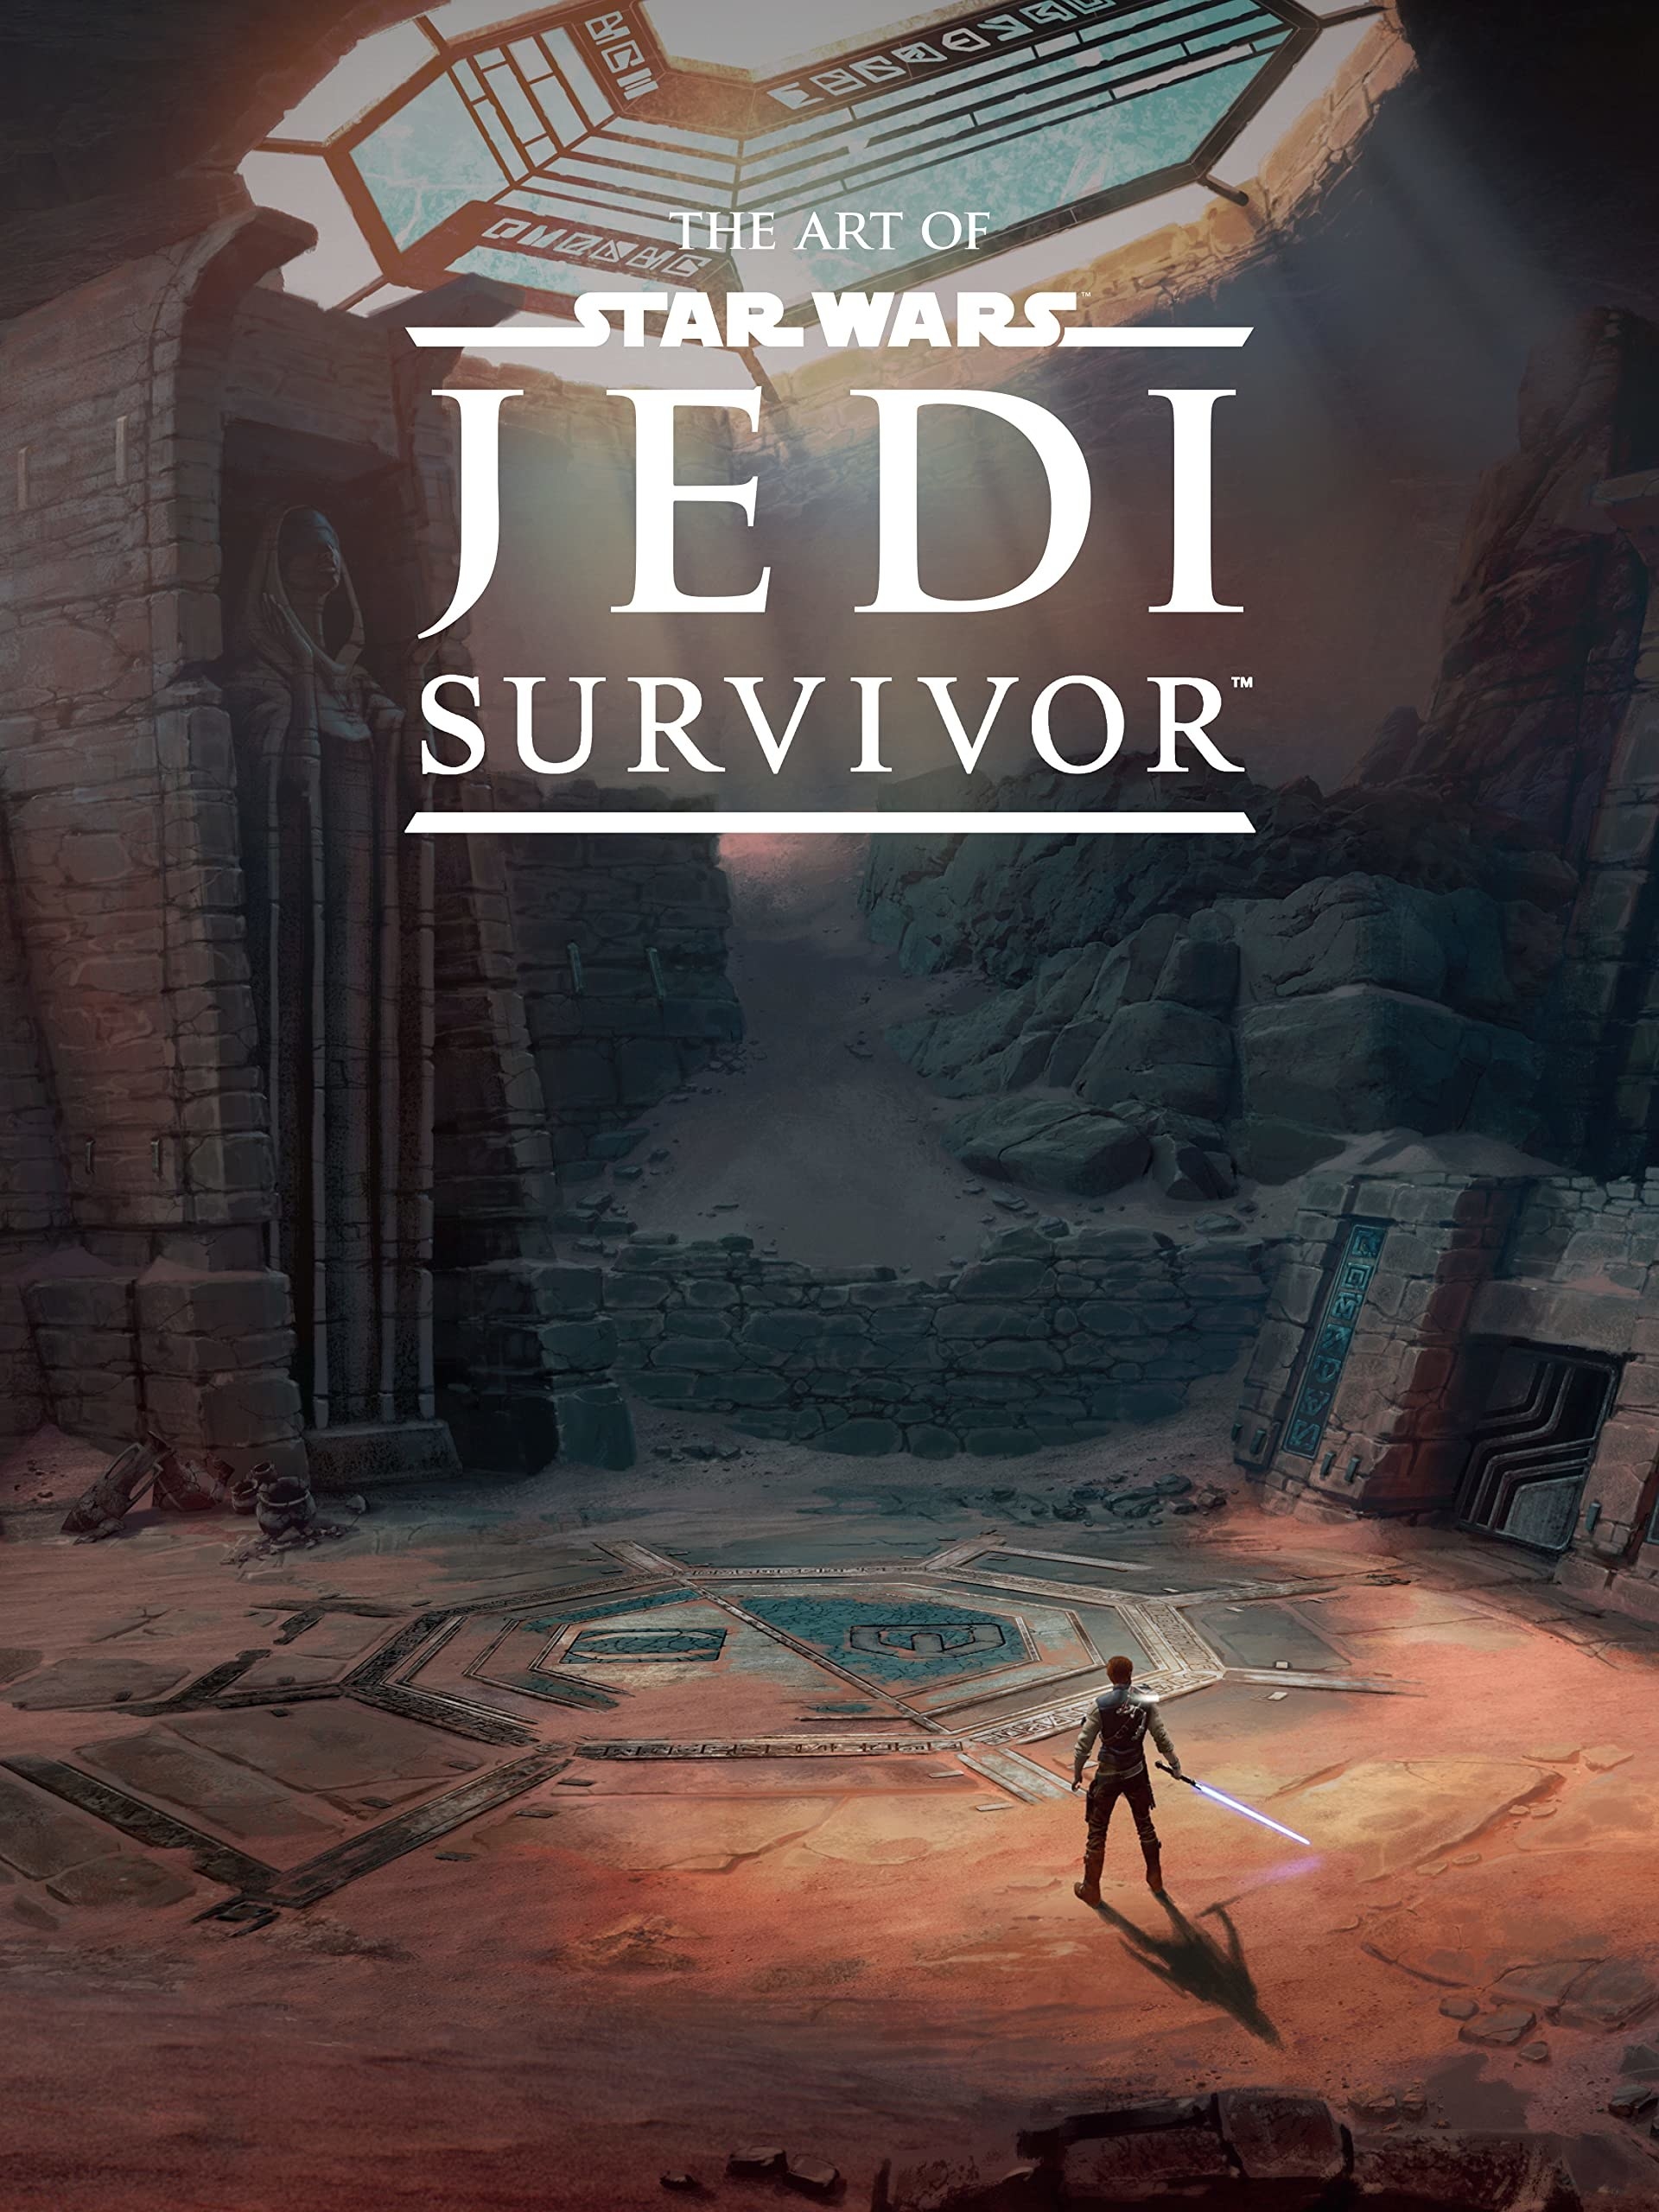 The cover of &#x27;The Art Of Star Wars Jedi Survivor&#x27;